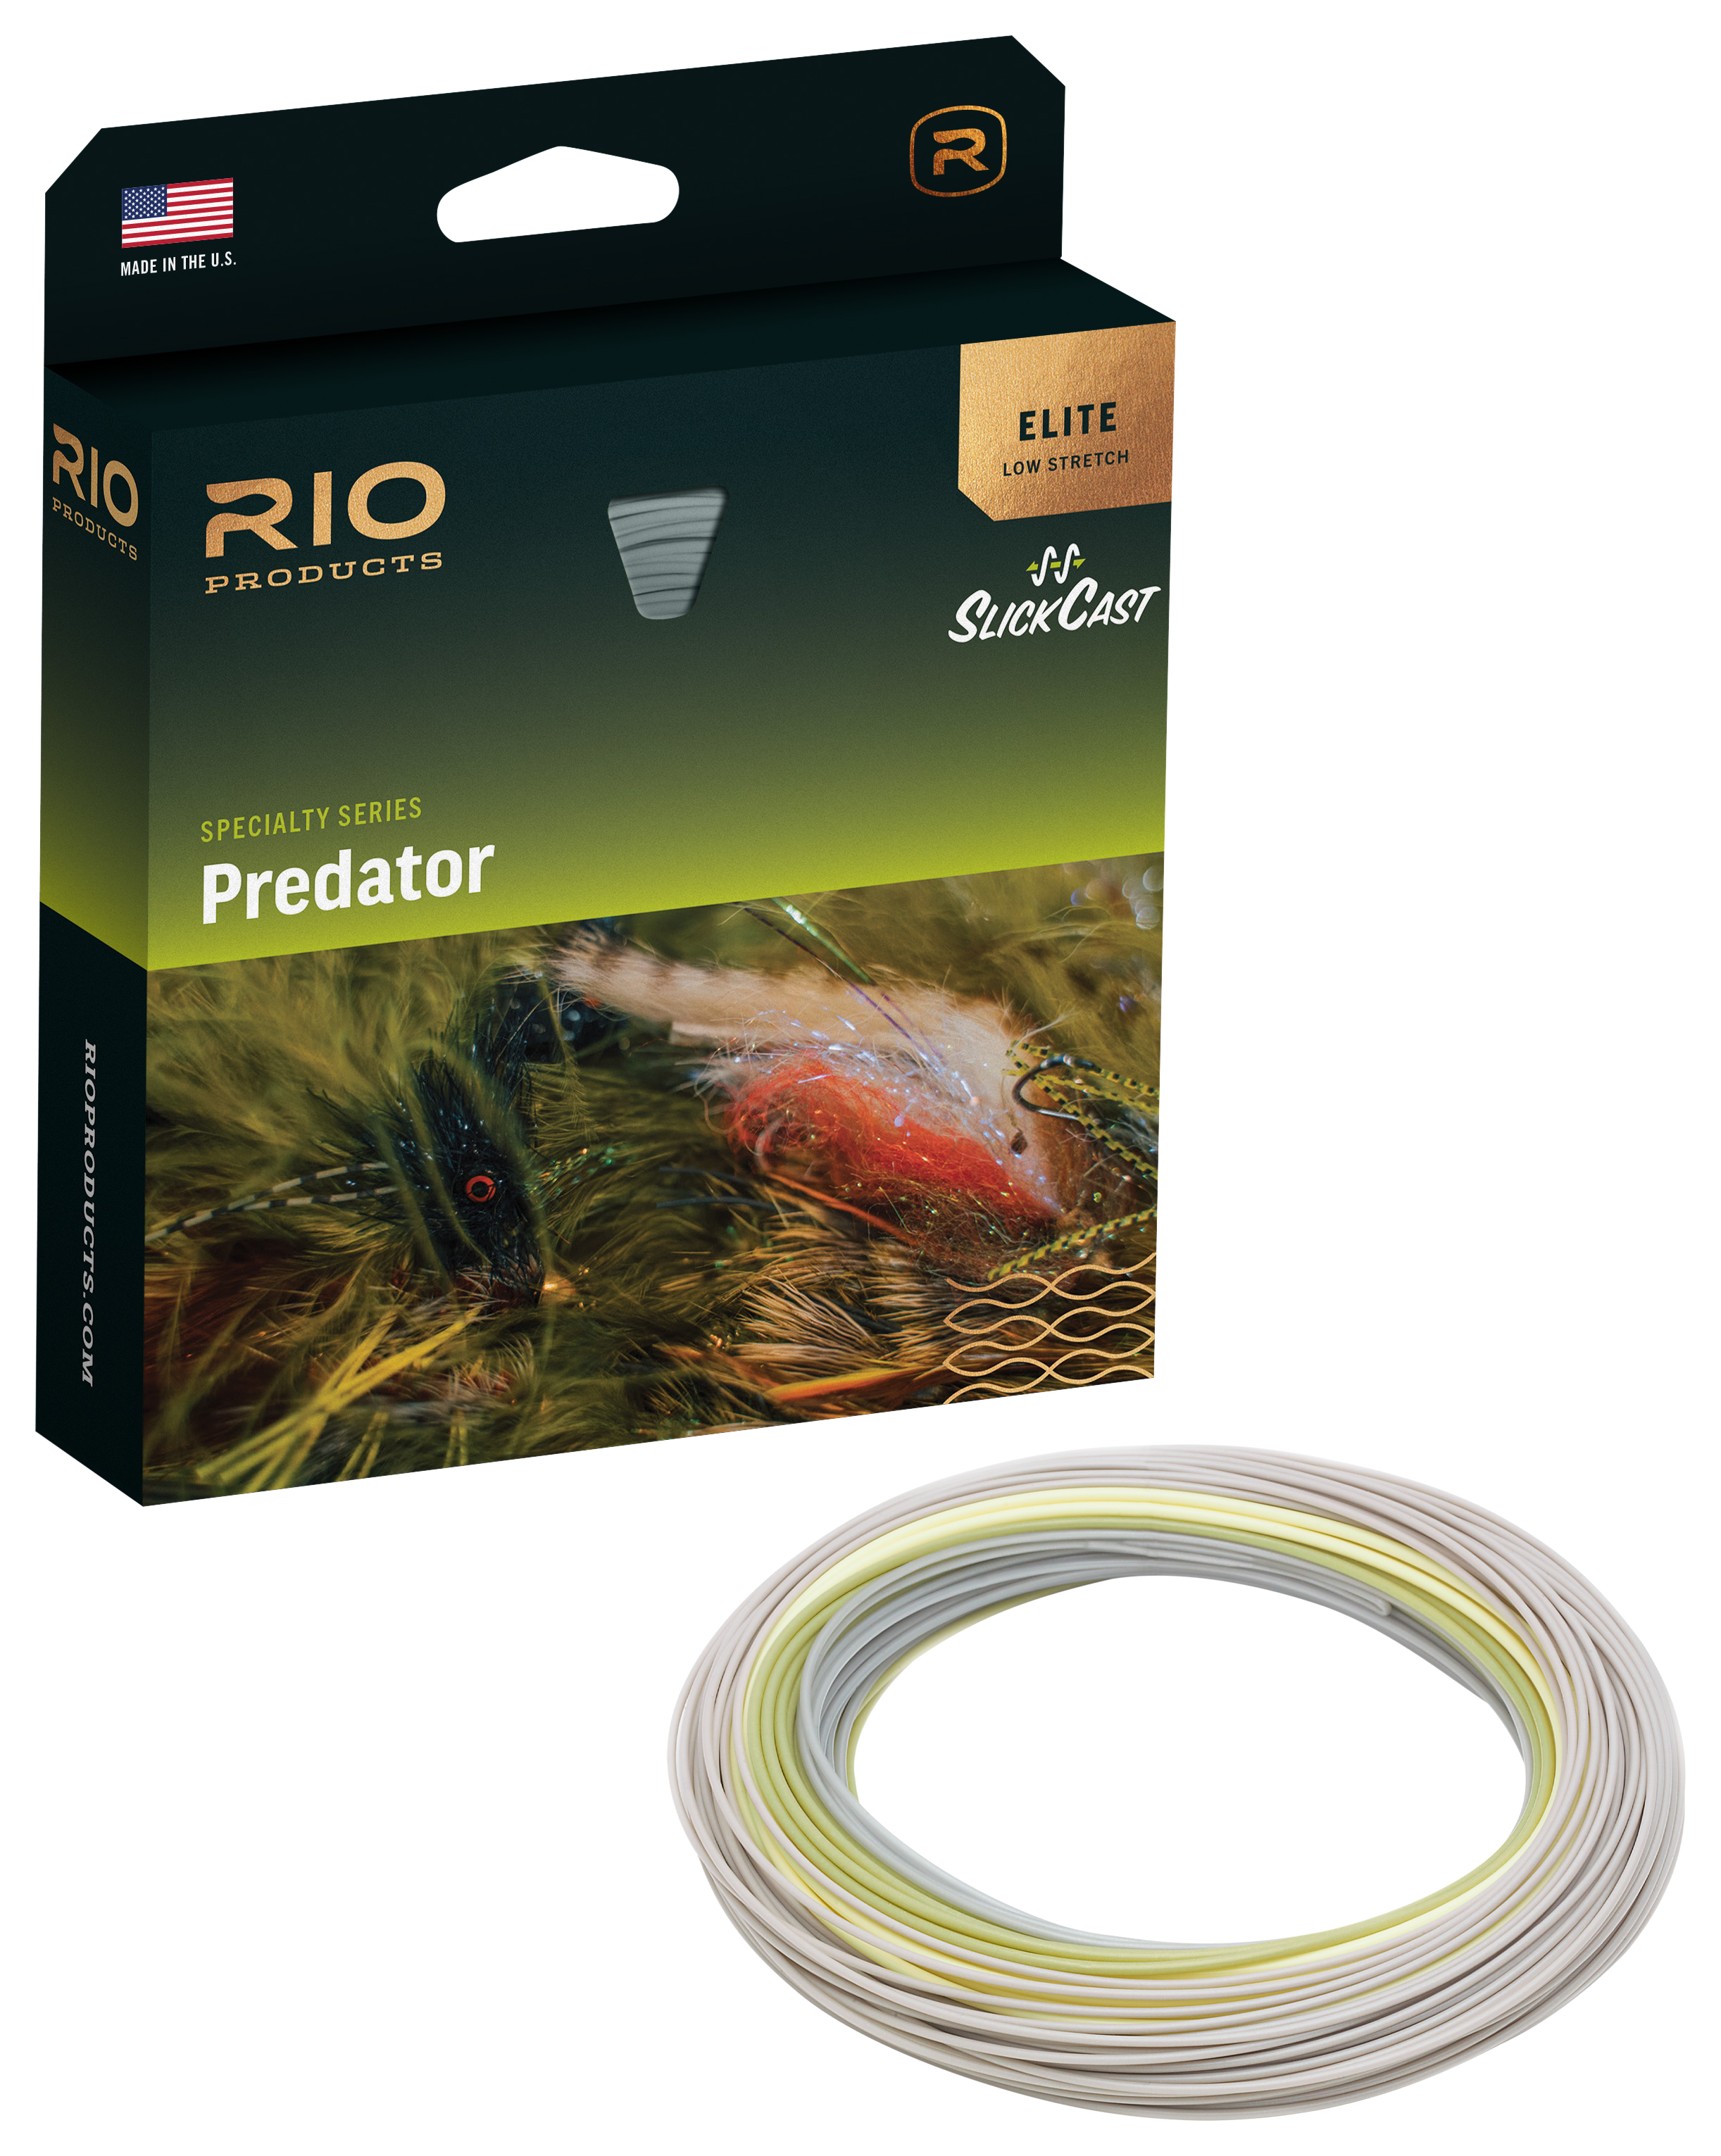 RIO Elite Predator Fly Line - Gray/Camo/Yellow/Beige - 10